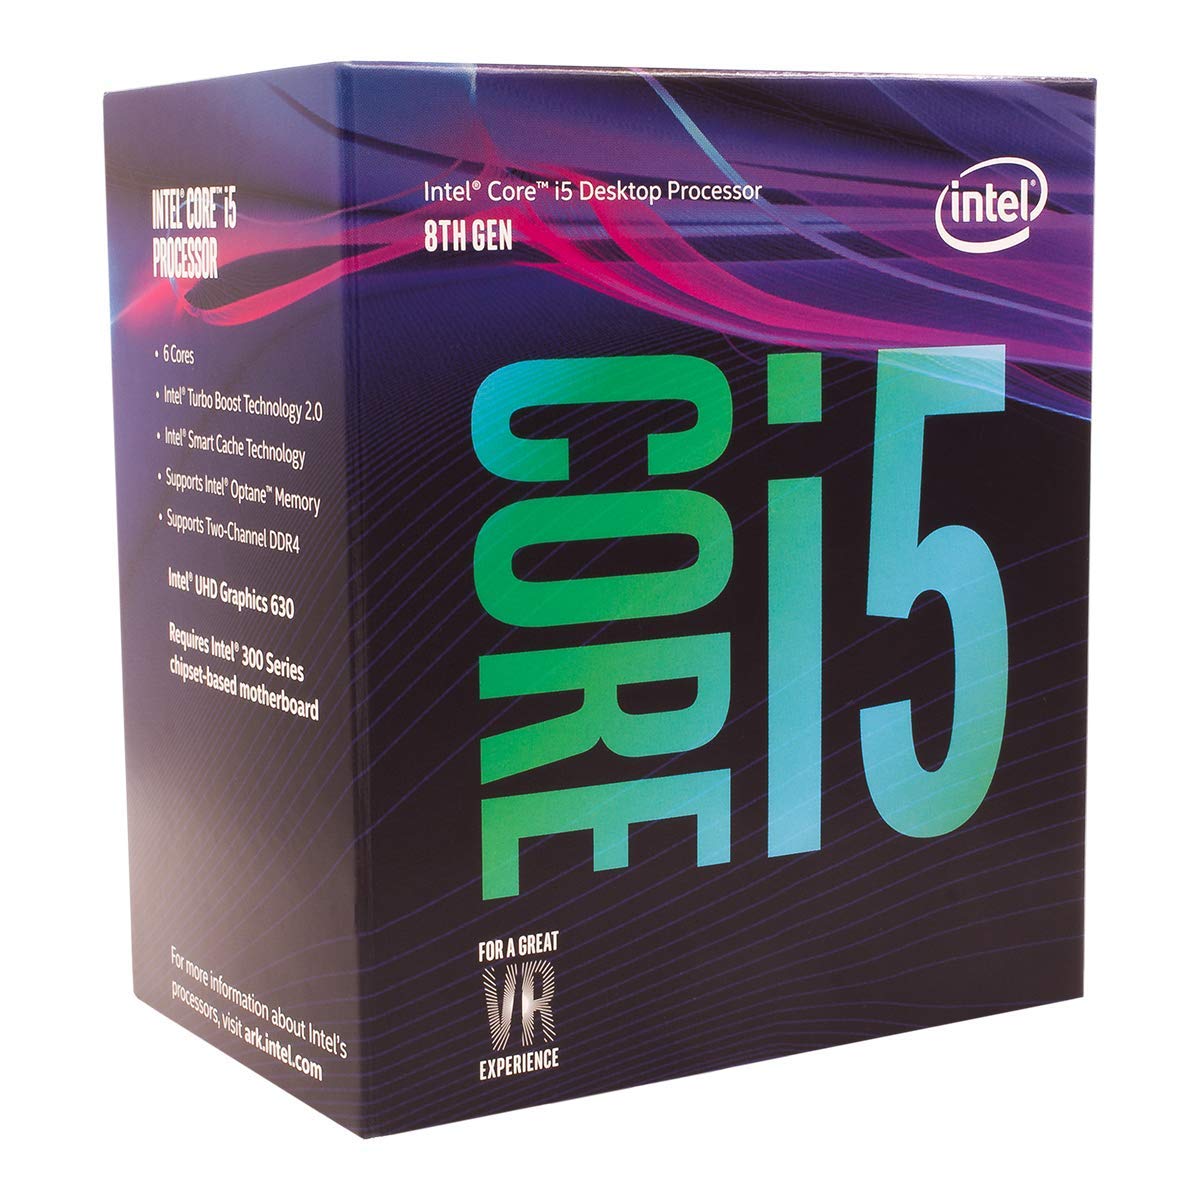 CPU INTEL CORE™ i5 8400 TH GEN 2.8 GHz 9MB CACHE SOK LGA 1151 TRAY بدون مروحه ,Desktop CPU